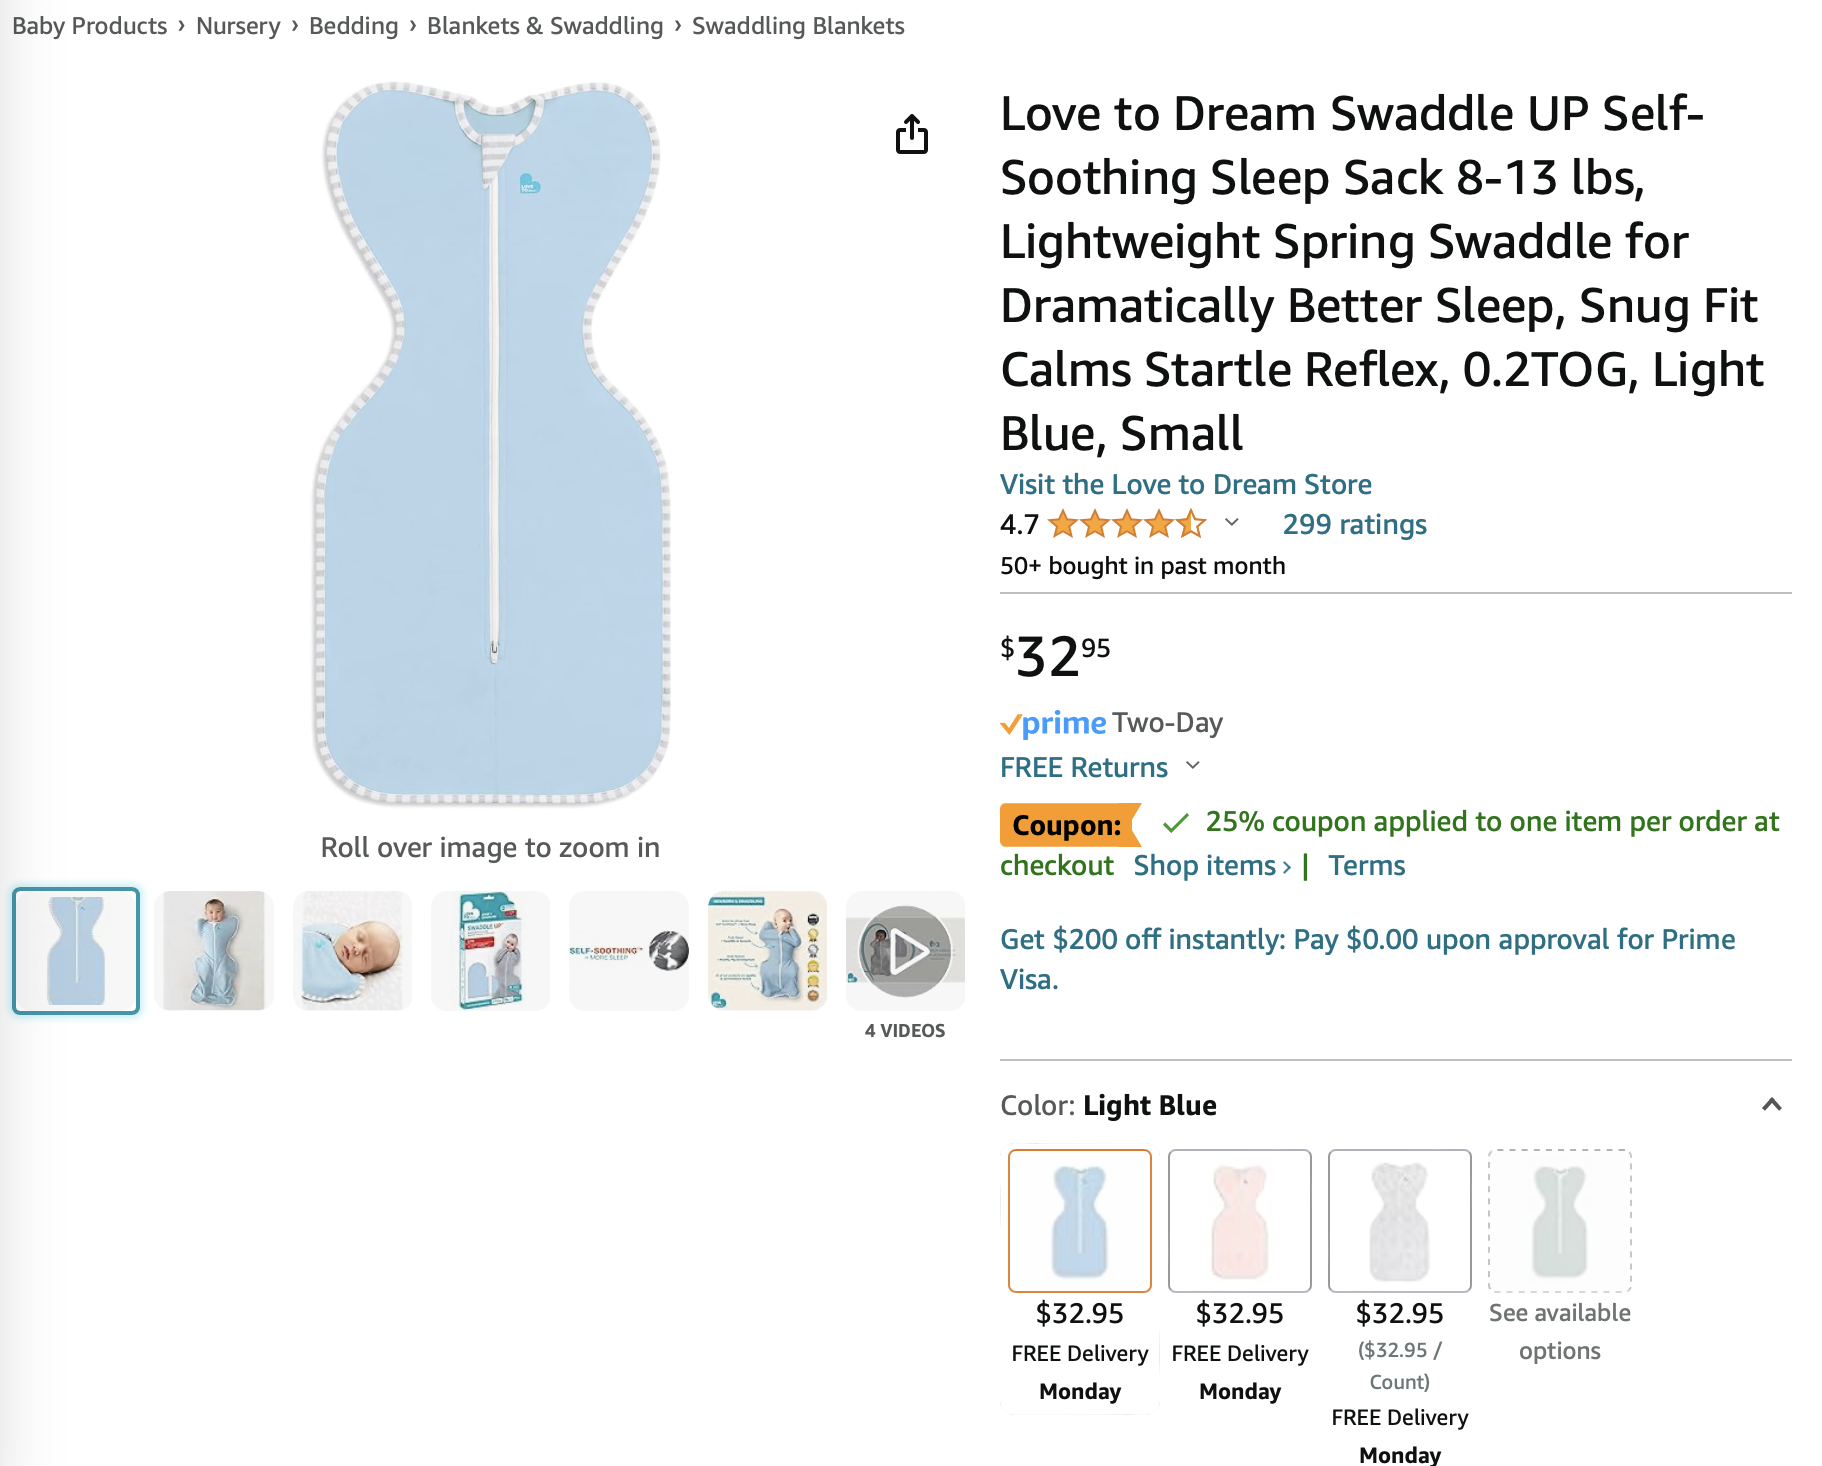 Amazon.com: Love to Dream Swaddle UP Self-Soothing Sleep Sack Lightweight Spring Swaddle 0.2TOG 宝宝睡袋促销 后悔没早点用，睡渣宝宝变睡神 7.5折 多种颜色款式